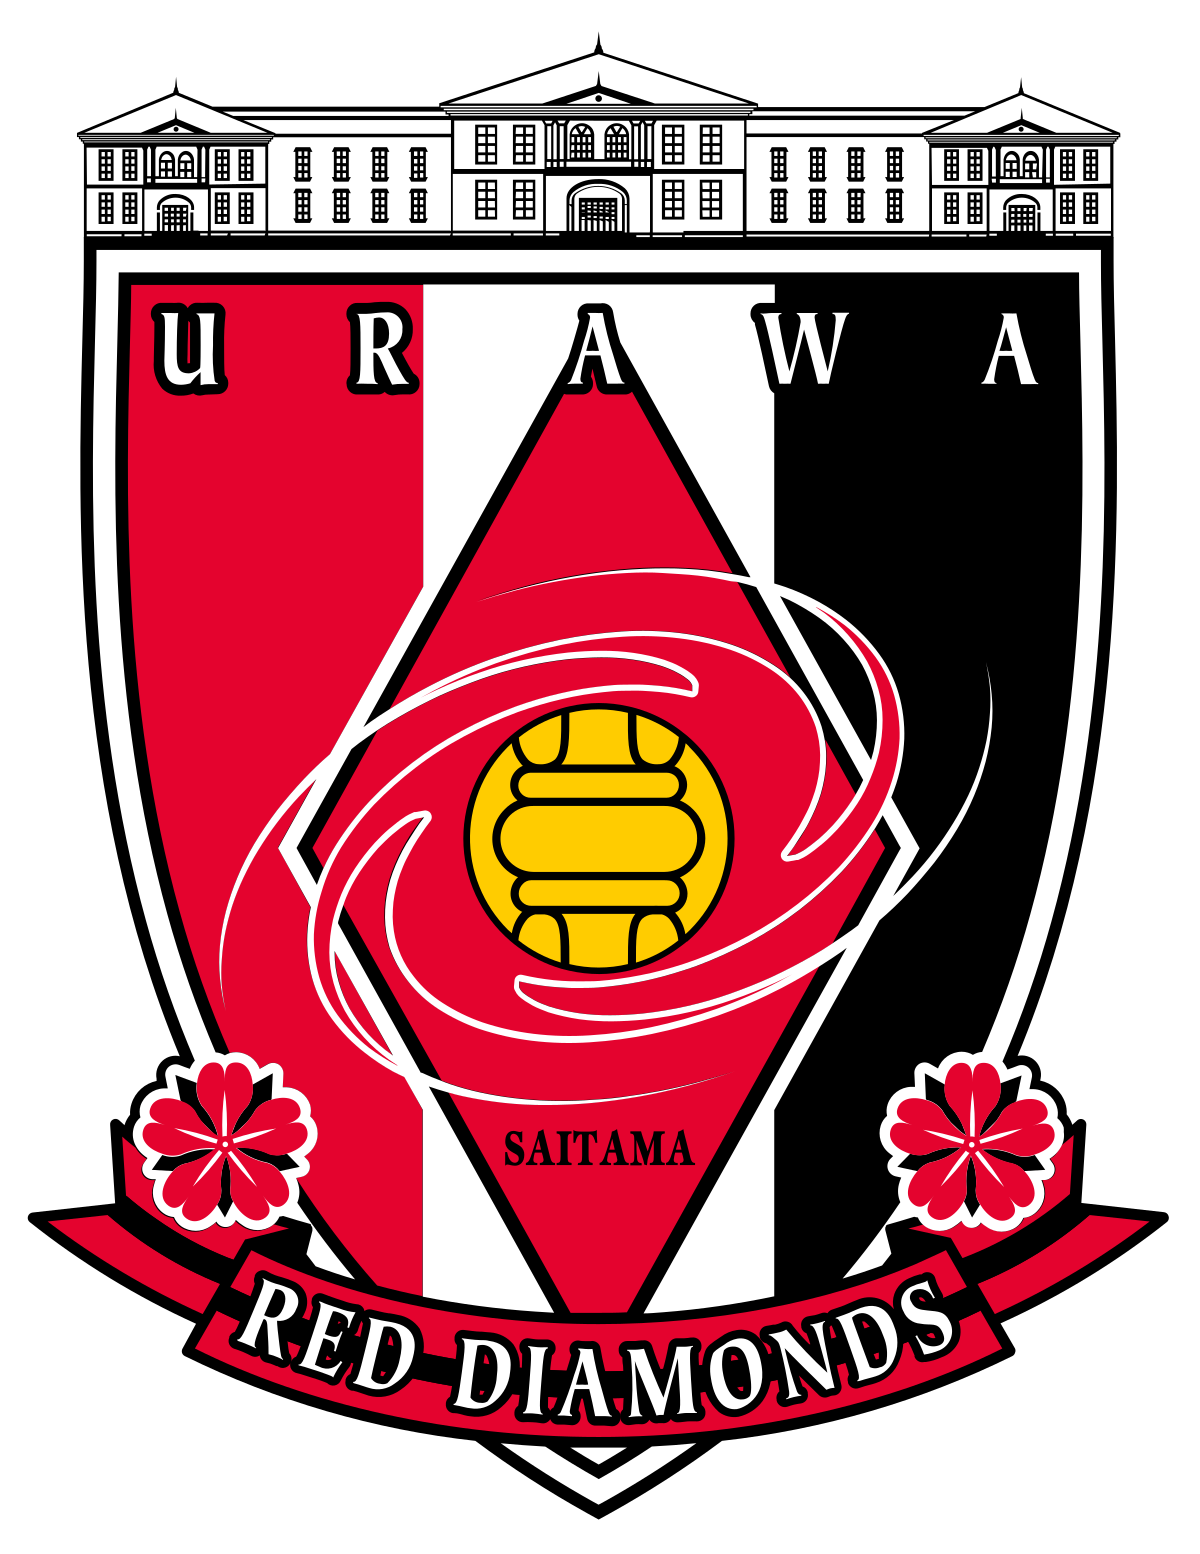 Urawa Red Diamonds (W)